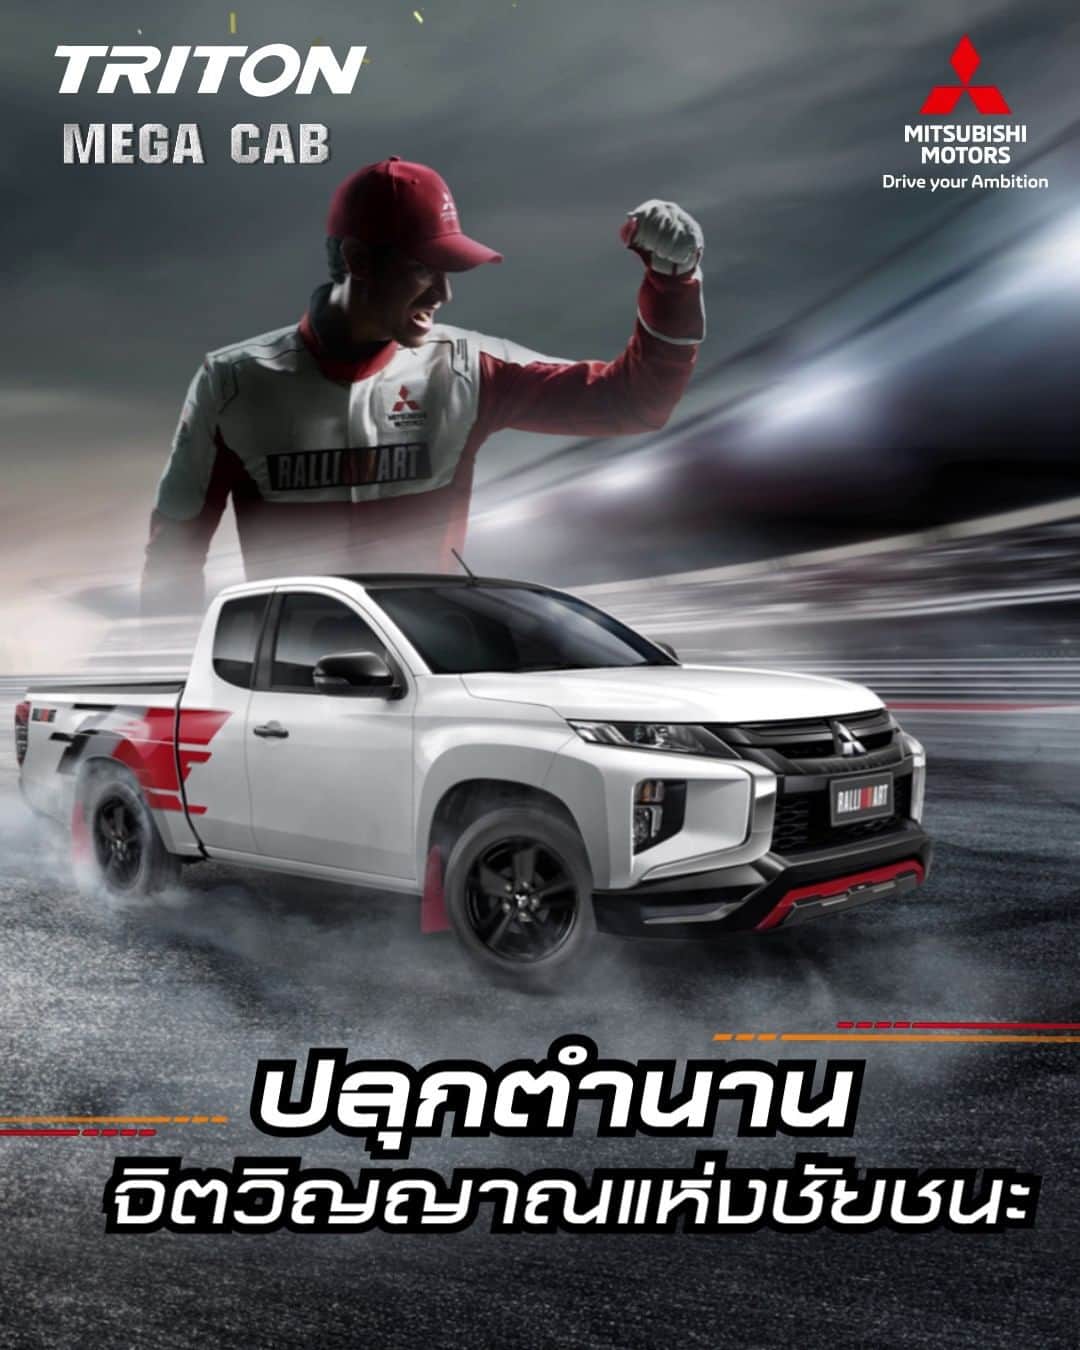 Mitsubishi Motors Thailandのインスタグラム：「"มิตซูบิชิ ไทรทัน แรลลี่อาร์ท รุ่นเมกะแค็บ" ลุยซิ่งไปกับแชมป์ เร้าใจกว่า ด้วยสุดยอดเทคโนโลยีจากสนามแข่งสุดโหด ส่งต่อความแกร่งสู่ทุกการใช้งานจริง ที่มาพร้อมดีไซน์การออกแบบแรงบันดาลใจจากรถแข่งแรลลี่ จุดเริ่มต้นการขับขี่ที่เร้าใจ ปลุกตำนานจิตวิญญาณแห่งชัยชนะในตัวคุณ พร้อมให้คุณเป็นเจ้าของแล้ว วันนี้ที่โชว์รูมทั่วประเทศ  #RALLIART  #MitsubishiMotorsThailand」